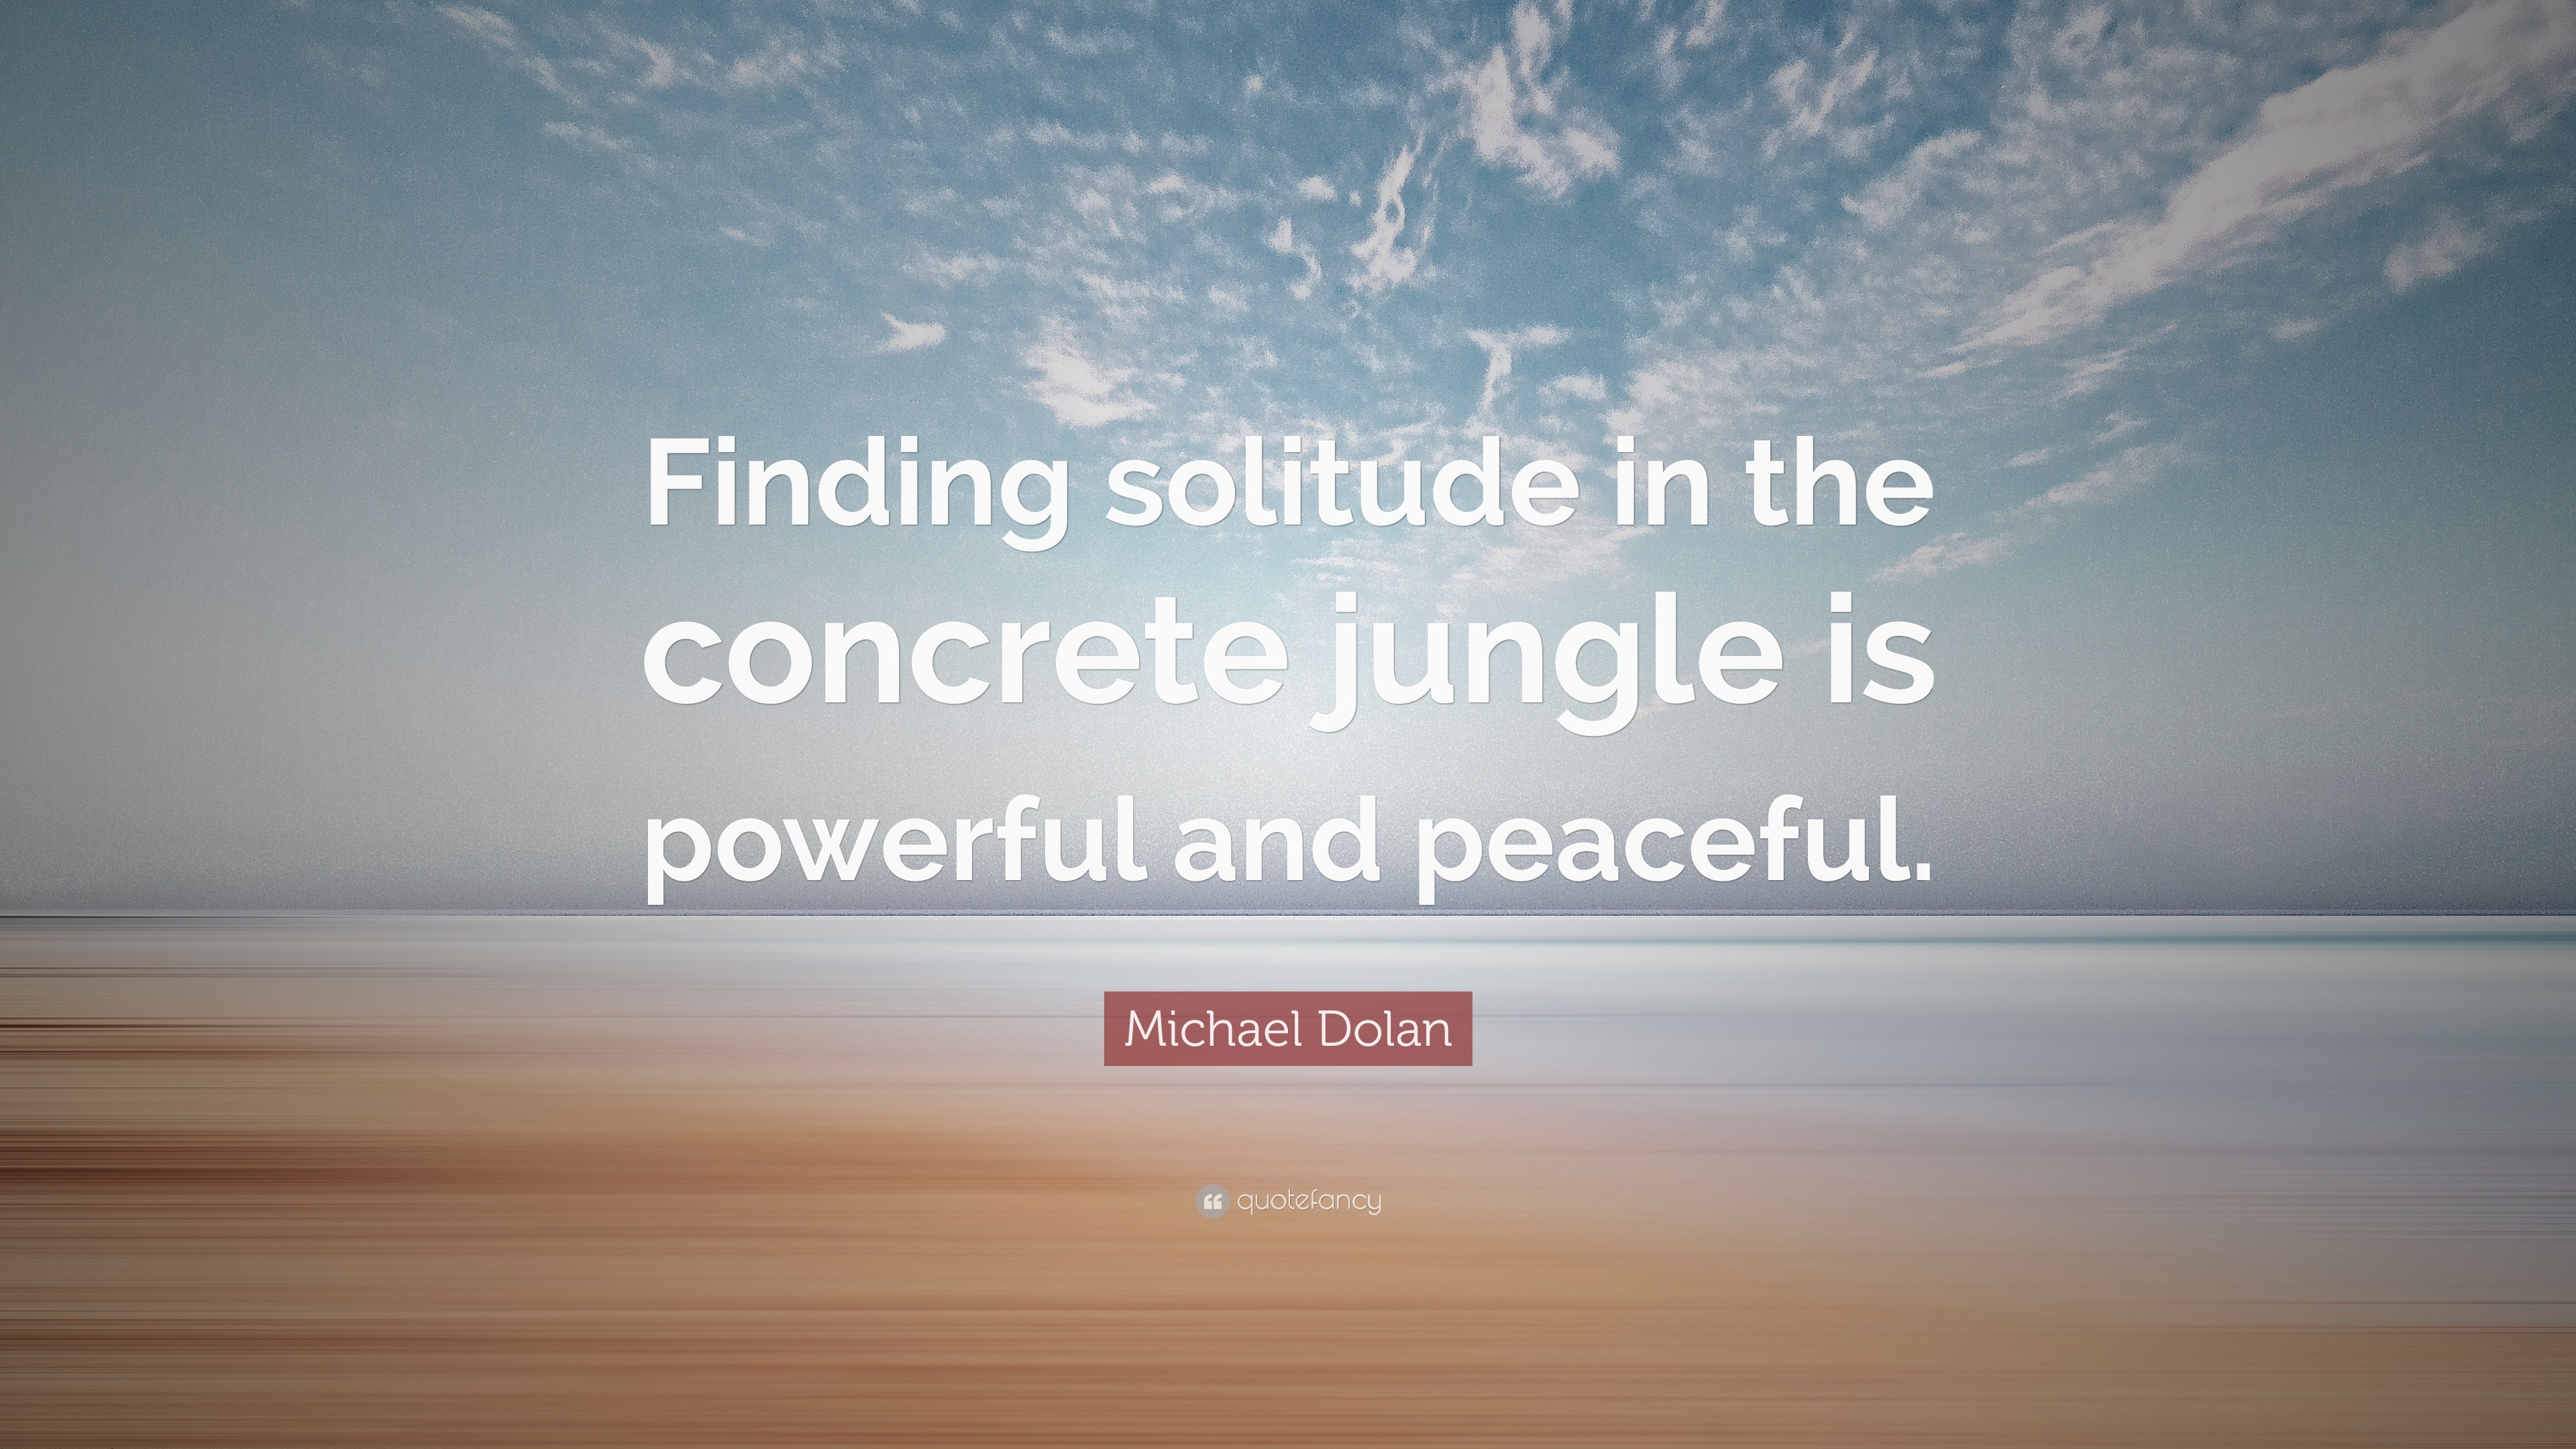 Concrete jungle quotes